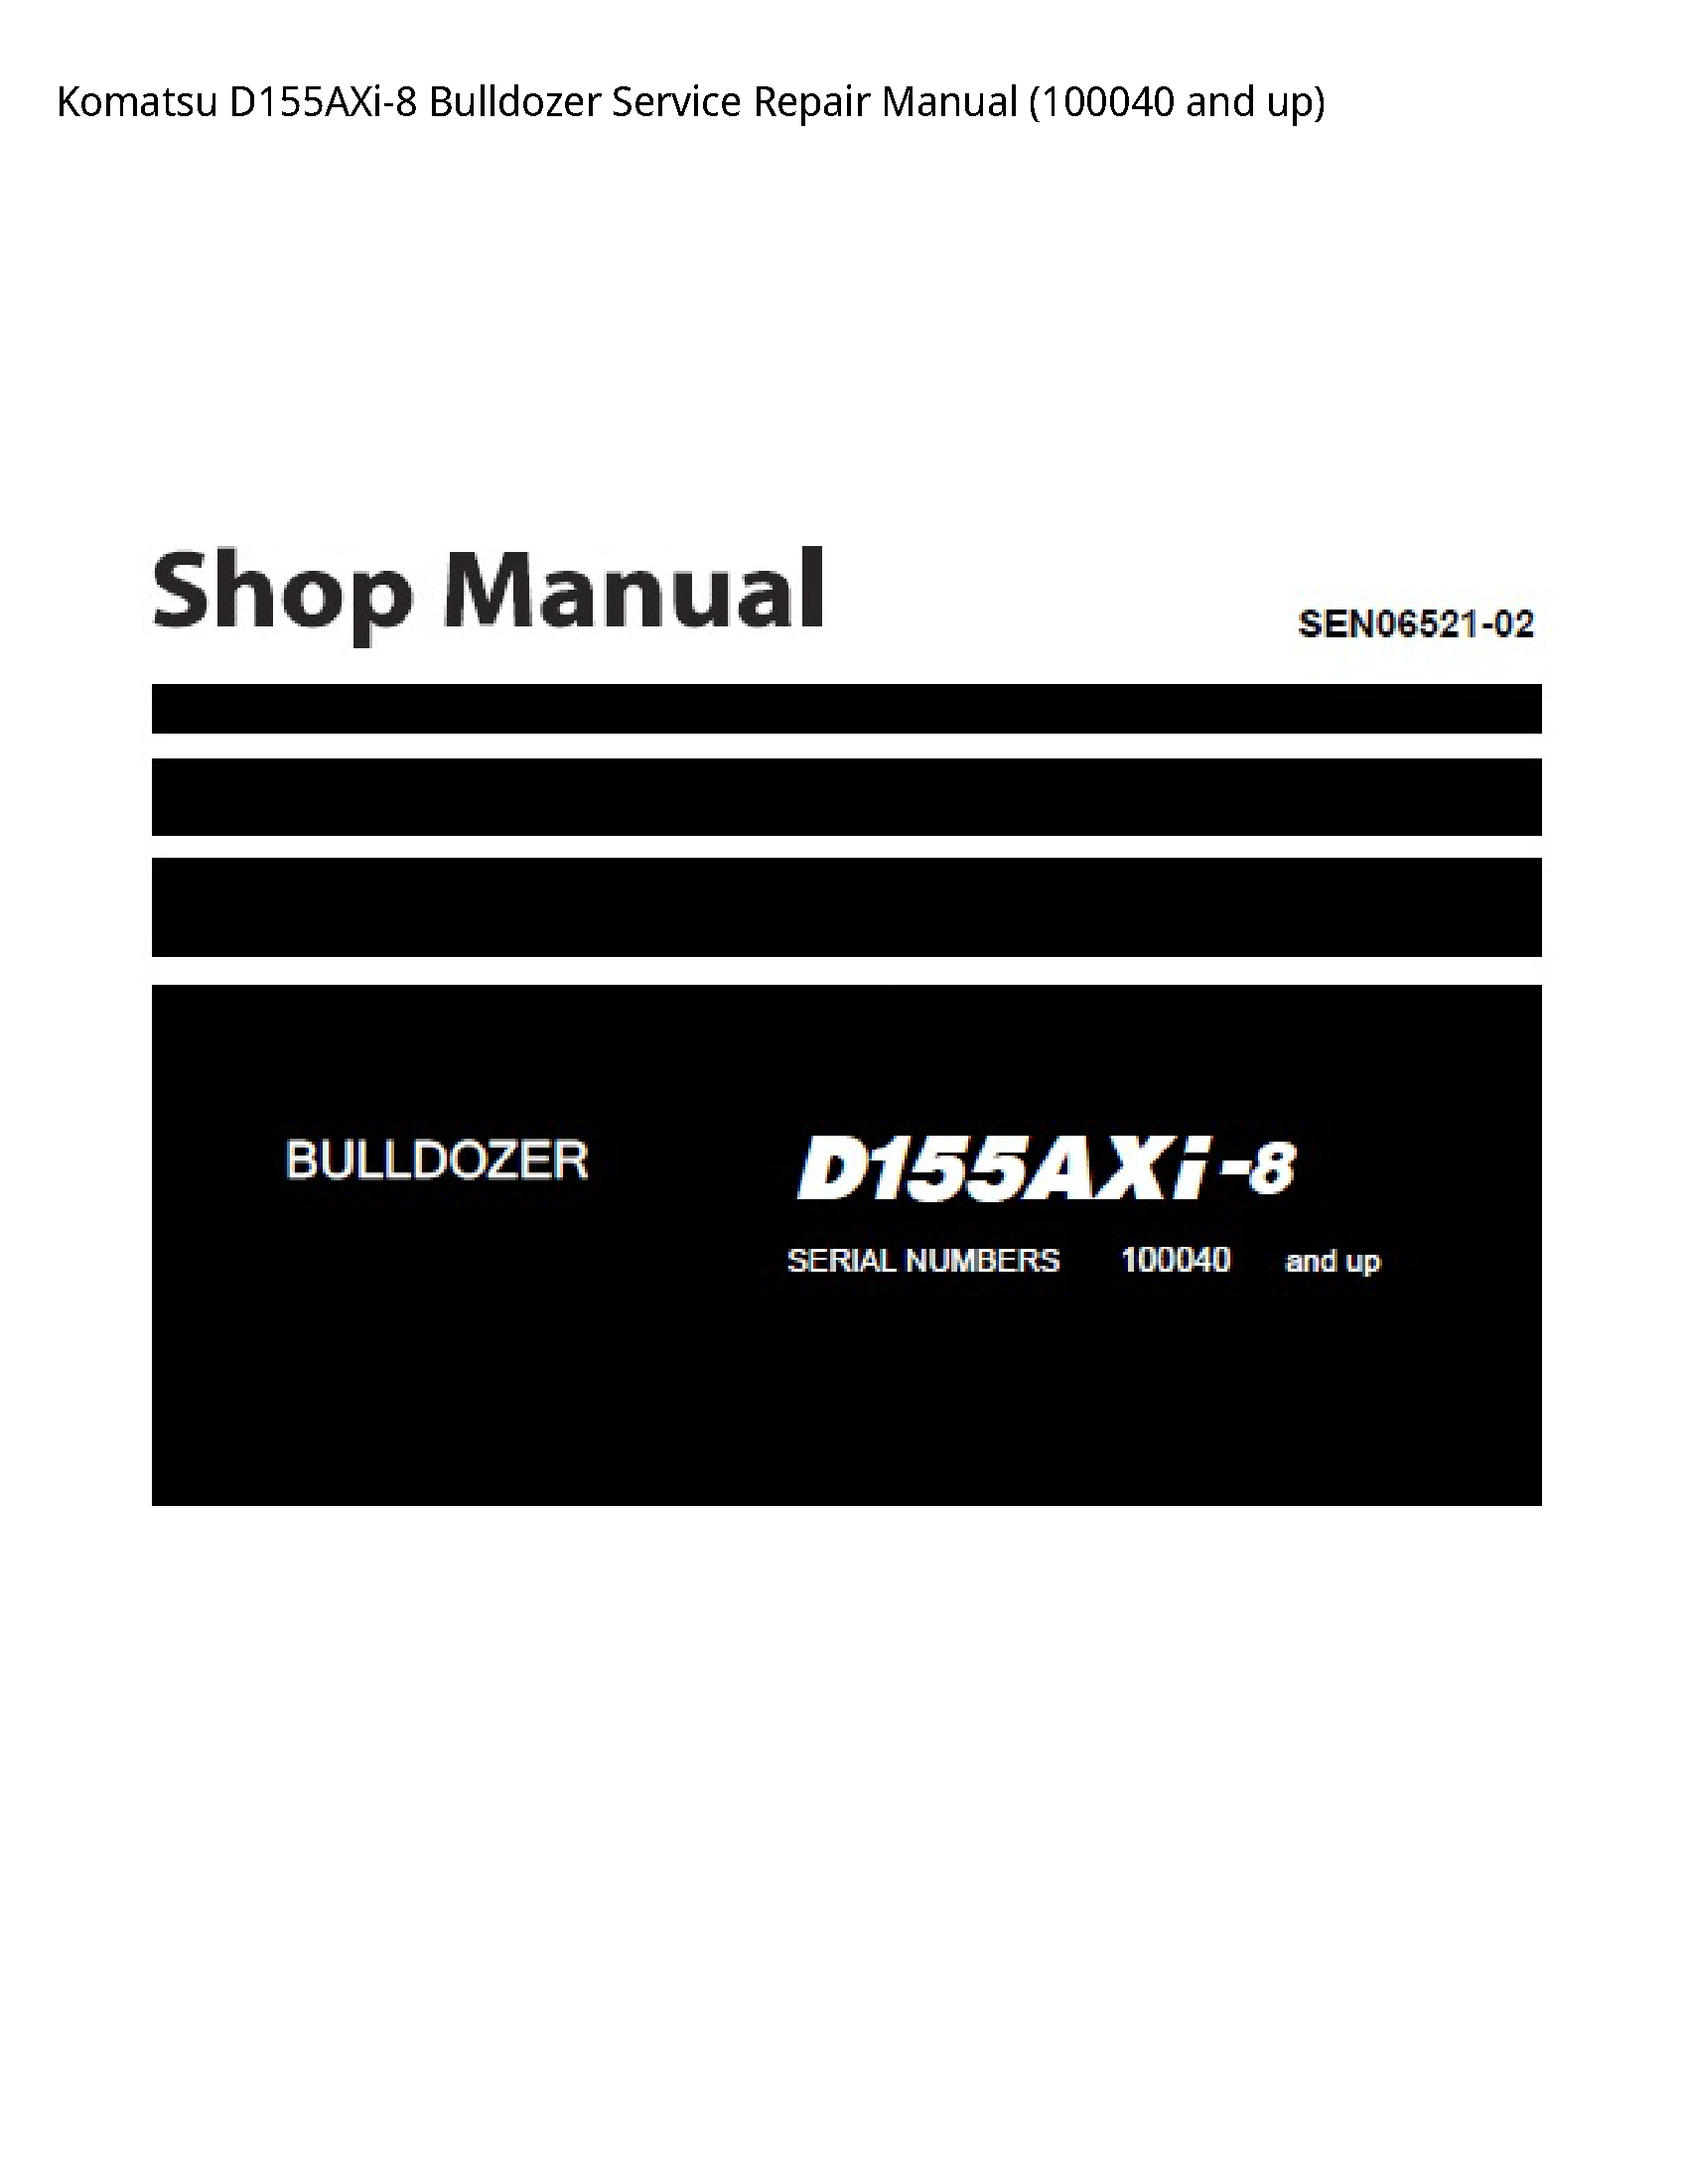 KOMATSU D155AXi-8 Bulldozer manual